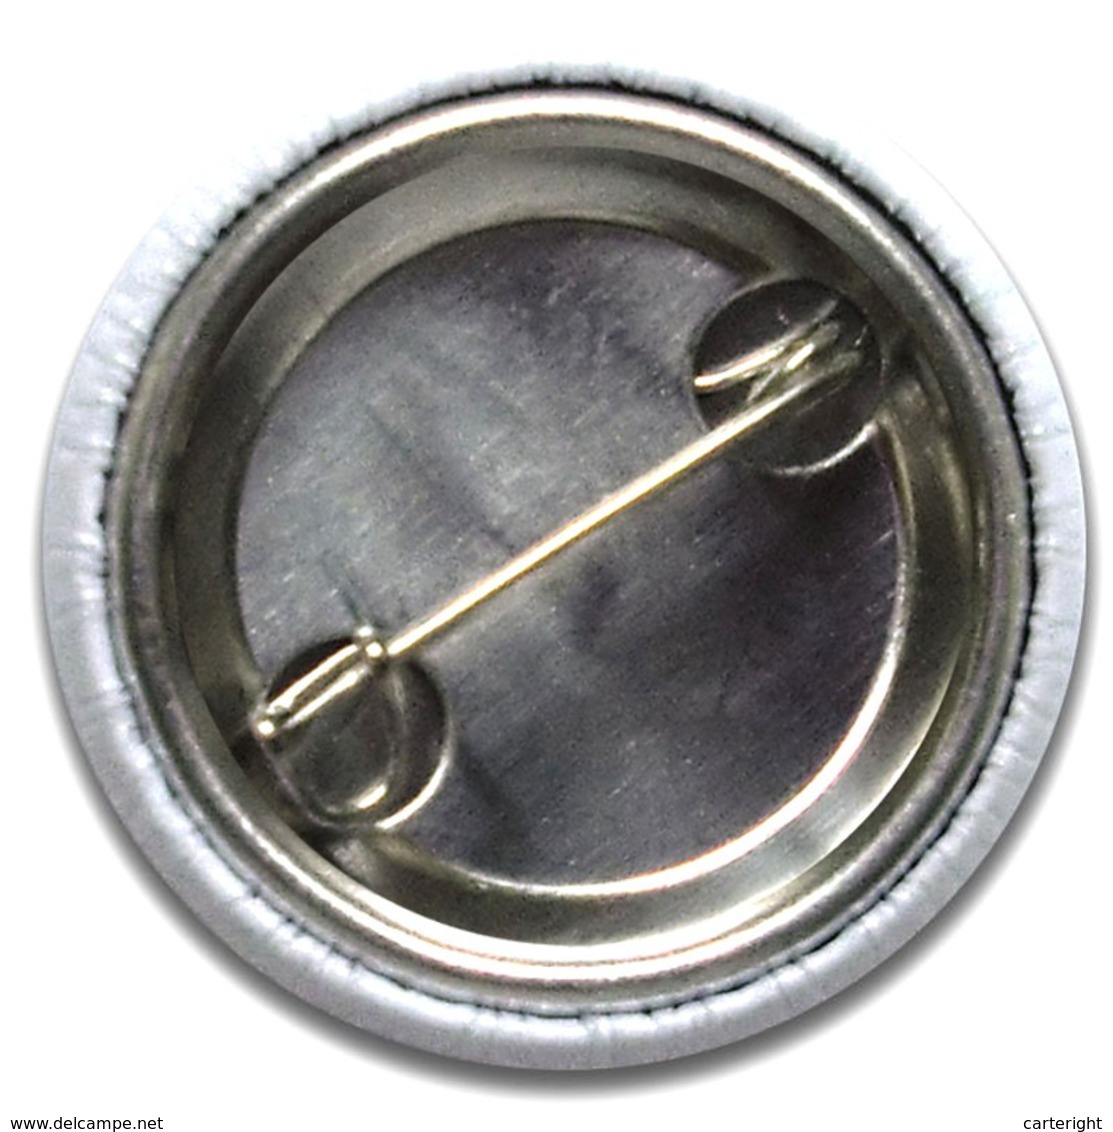 35 X Hank Williams Music Fan ART BADGE BUTTON PIN SET 1 (1inch/25mm Diameter) - Music